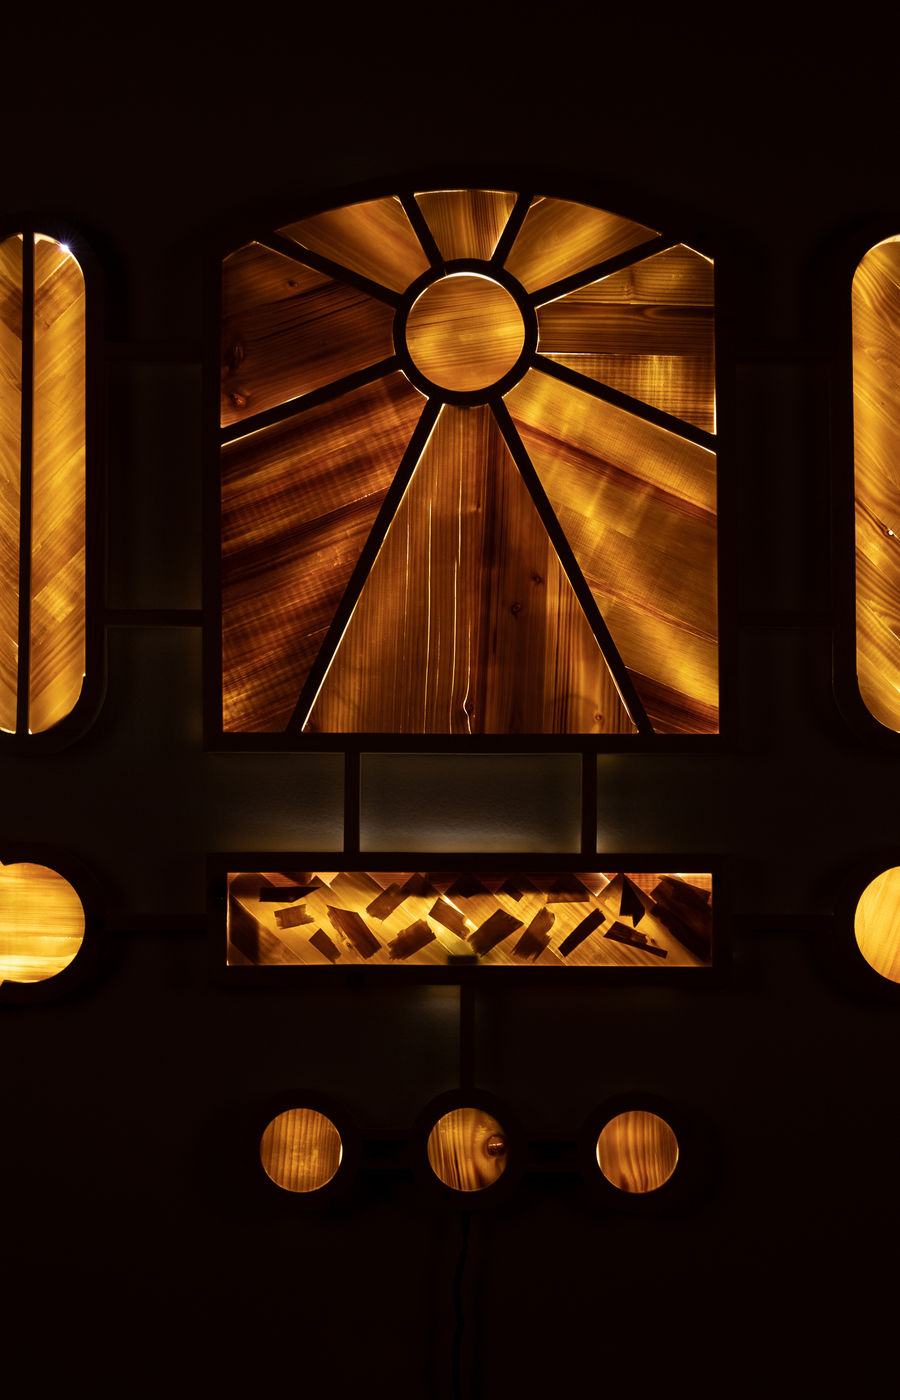 Wood Shrine, wooden light panel, on on a black background.